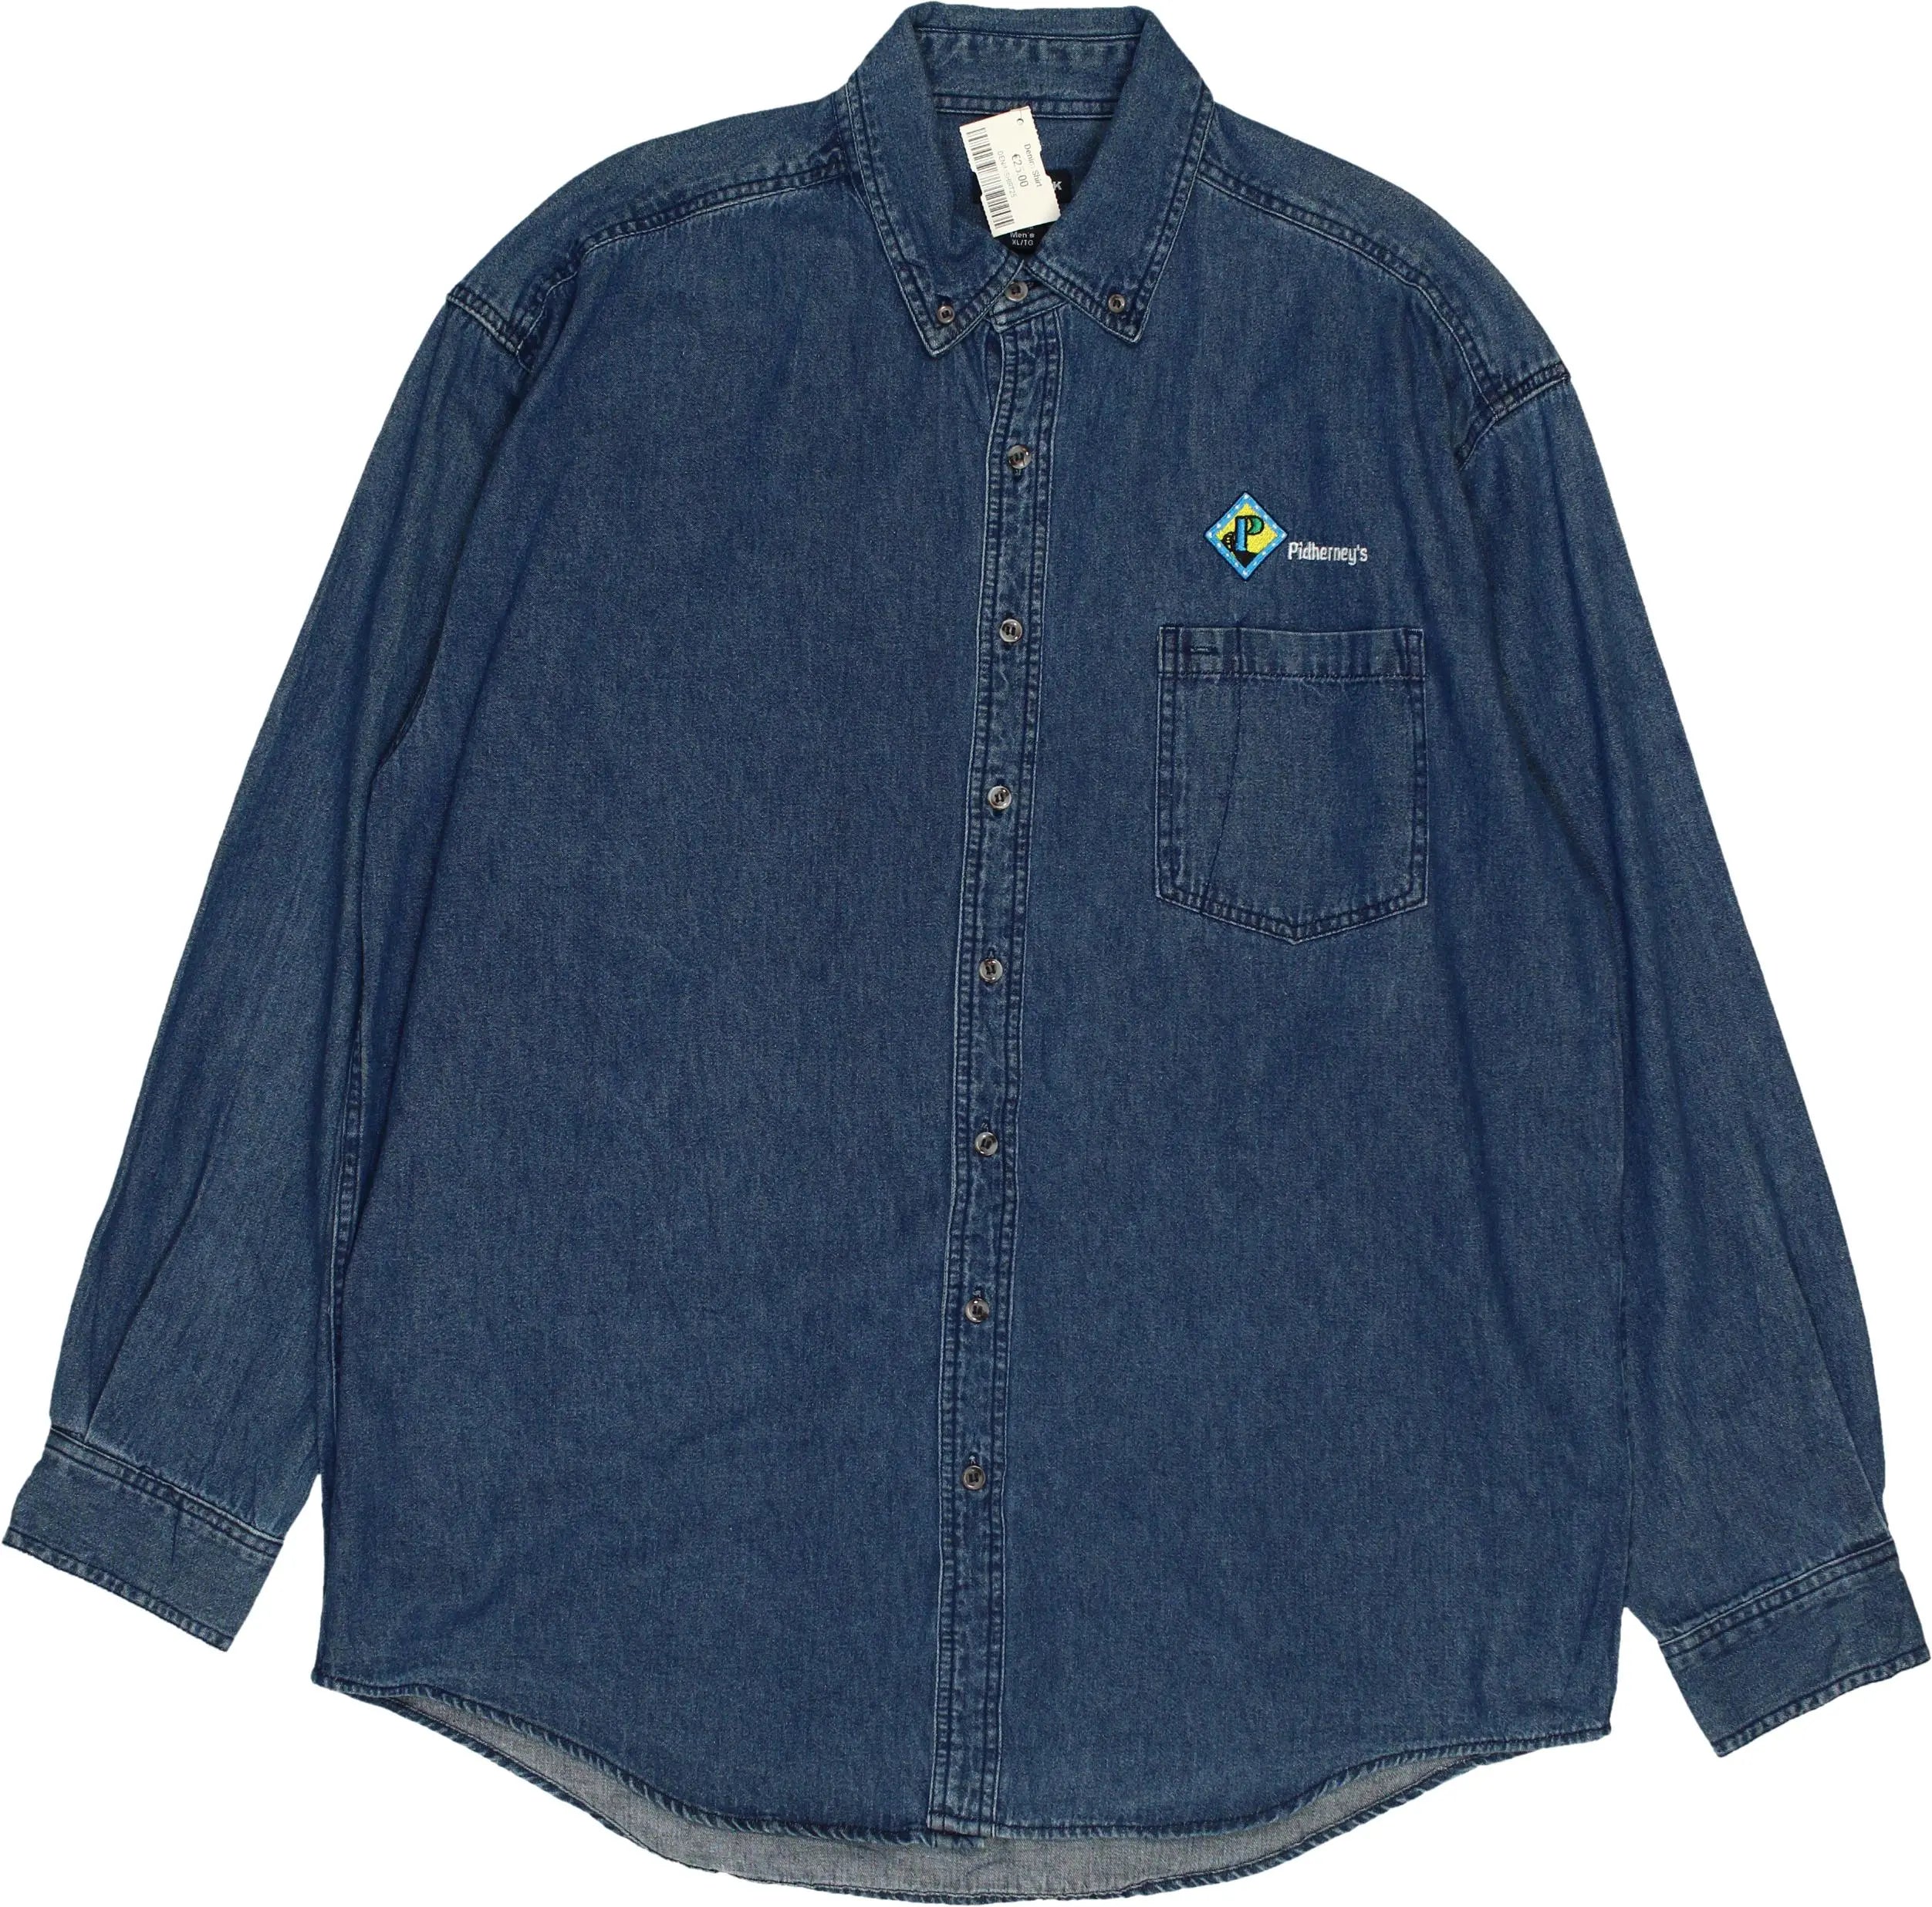 Landmark - Denim Shirt- ThriftTale.com - Vintage and second handclothing